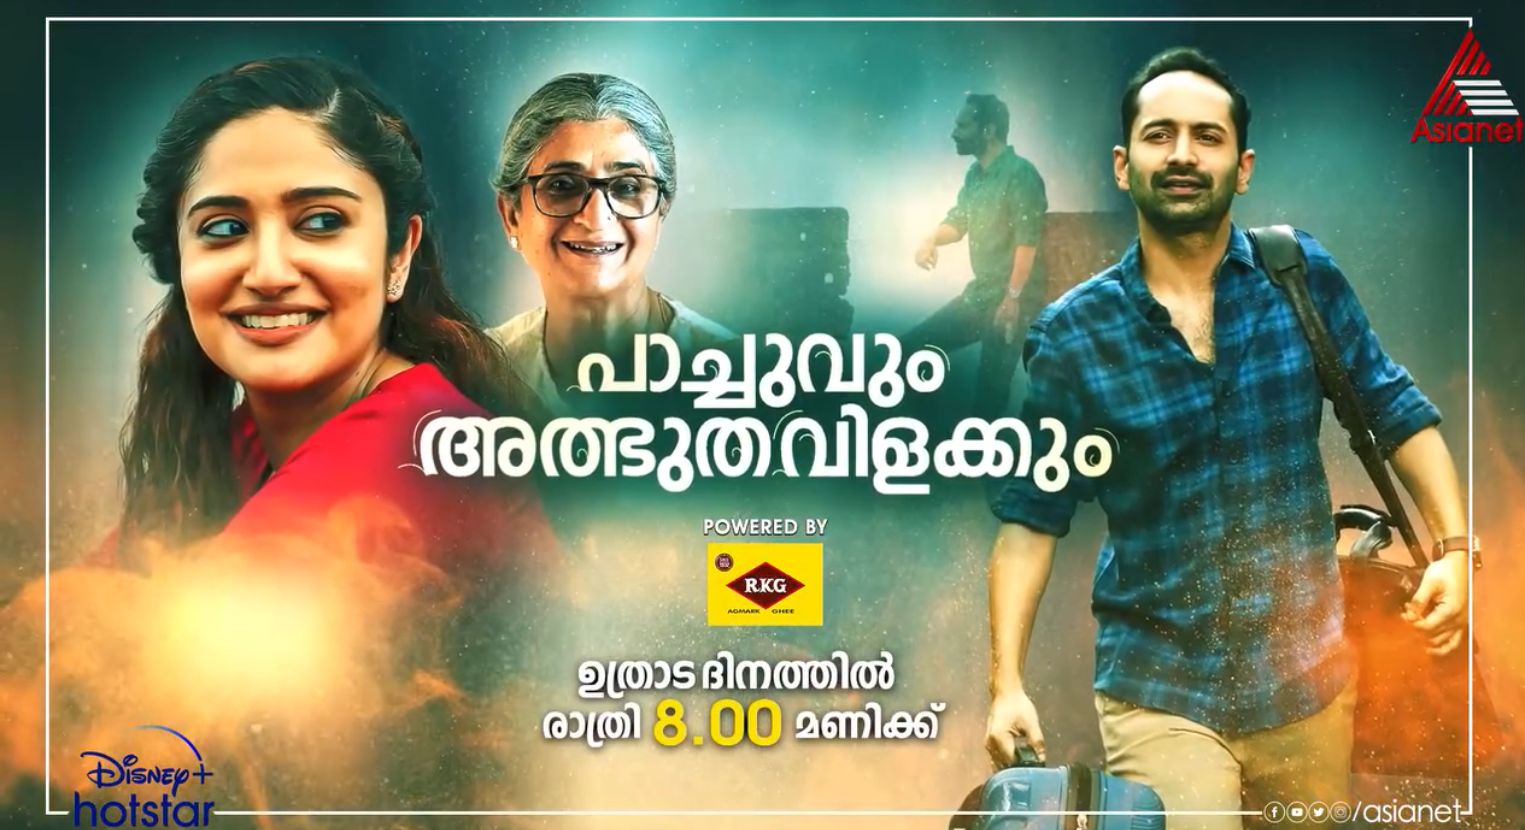 Bigg Boss Malayalam Season 4 Live Streaming Started on Disney +Hotstar Application 1